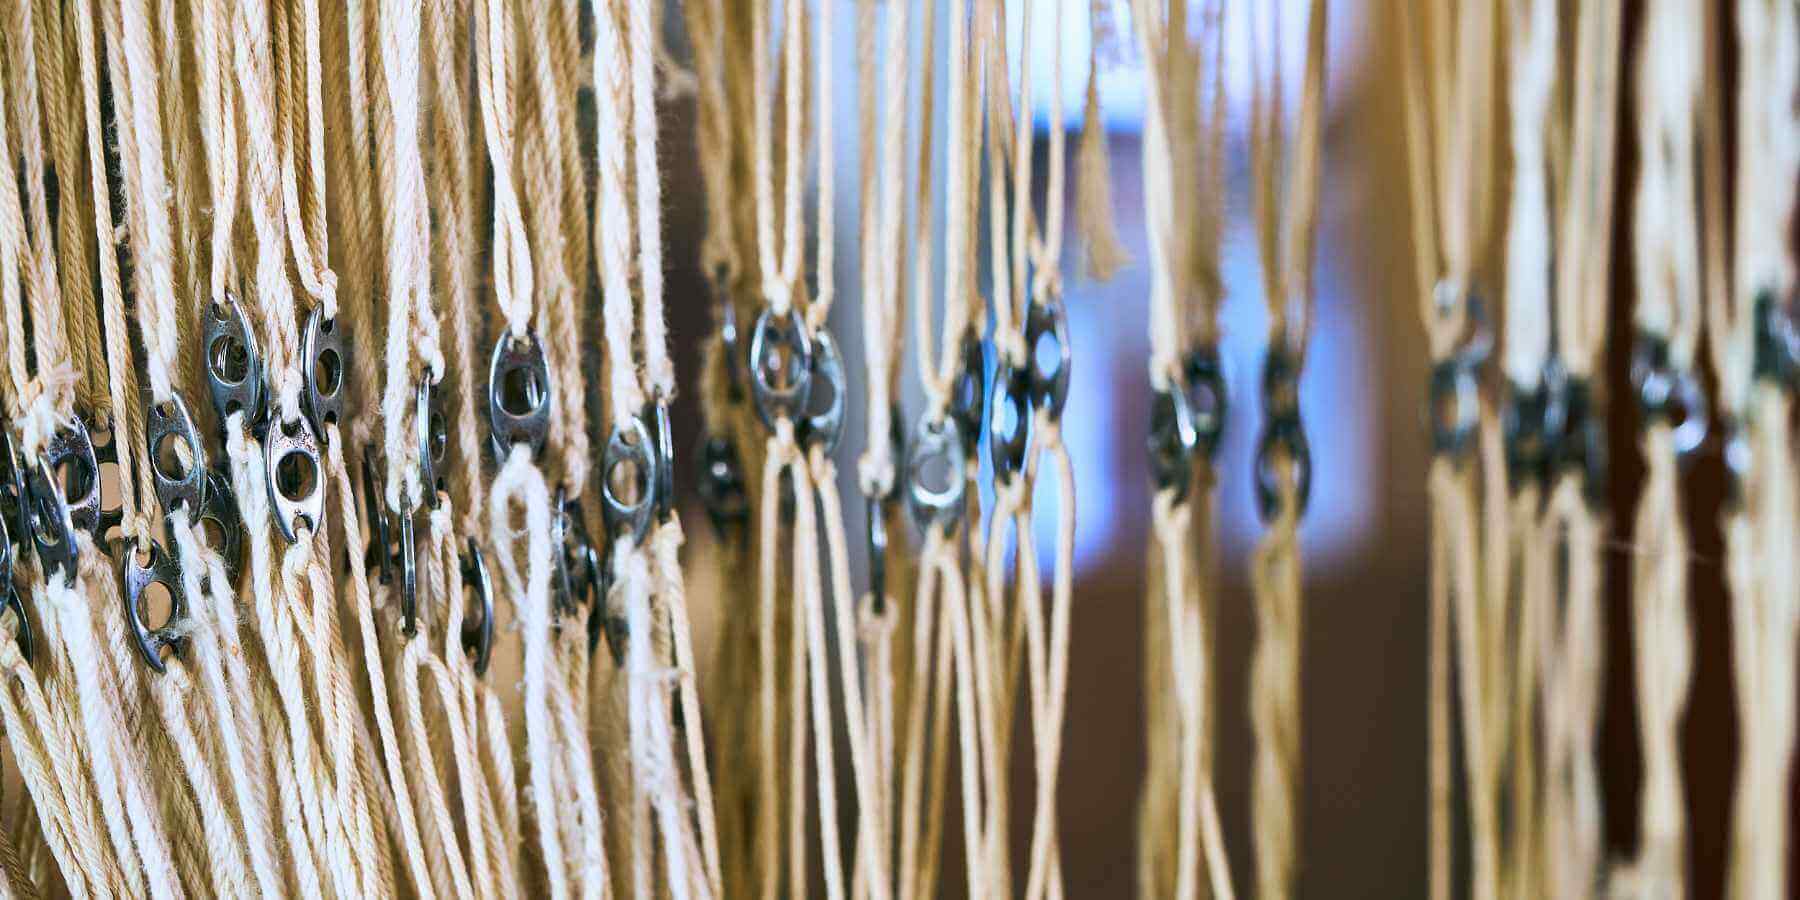 The loom's strings on one of the original looms in the Sandwerf Weavery.